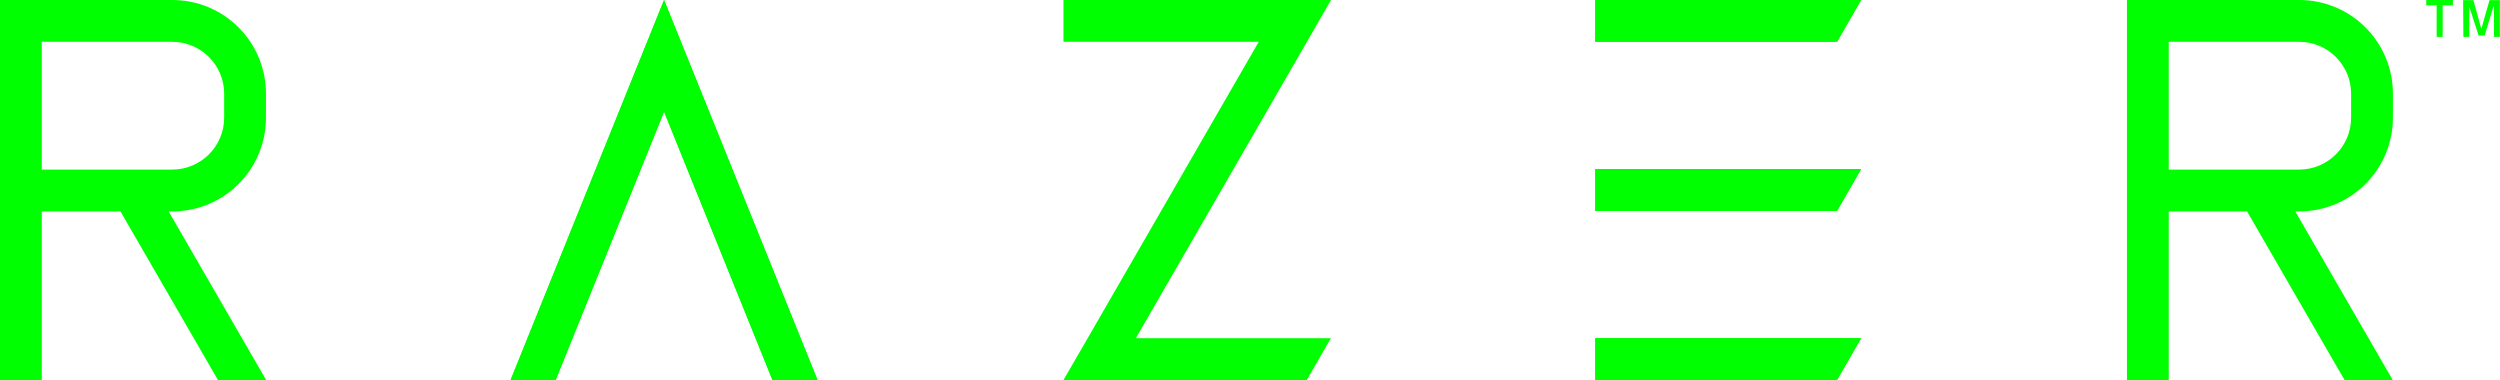 Razer logo large (transparent PNG)